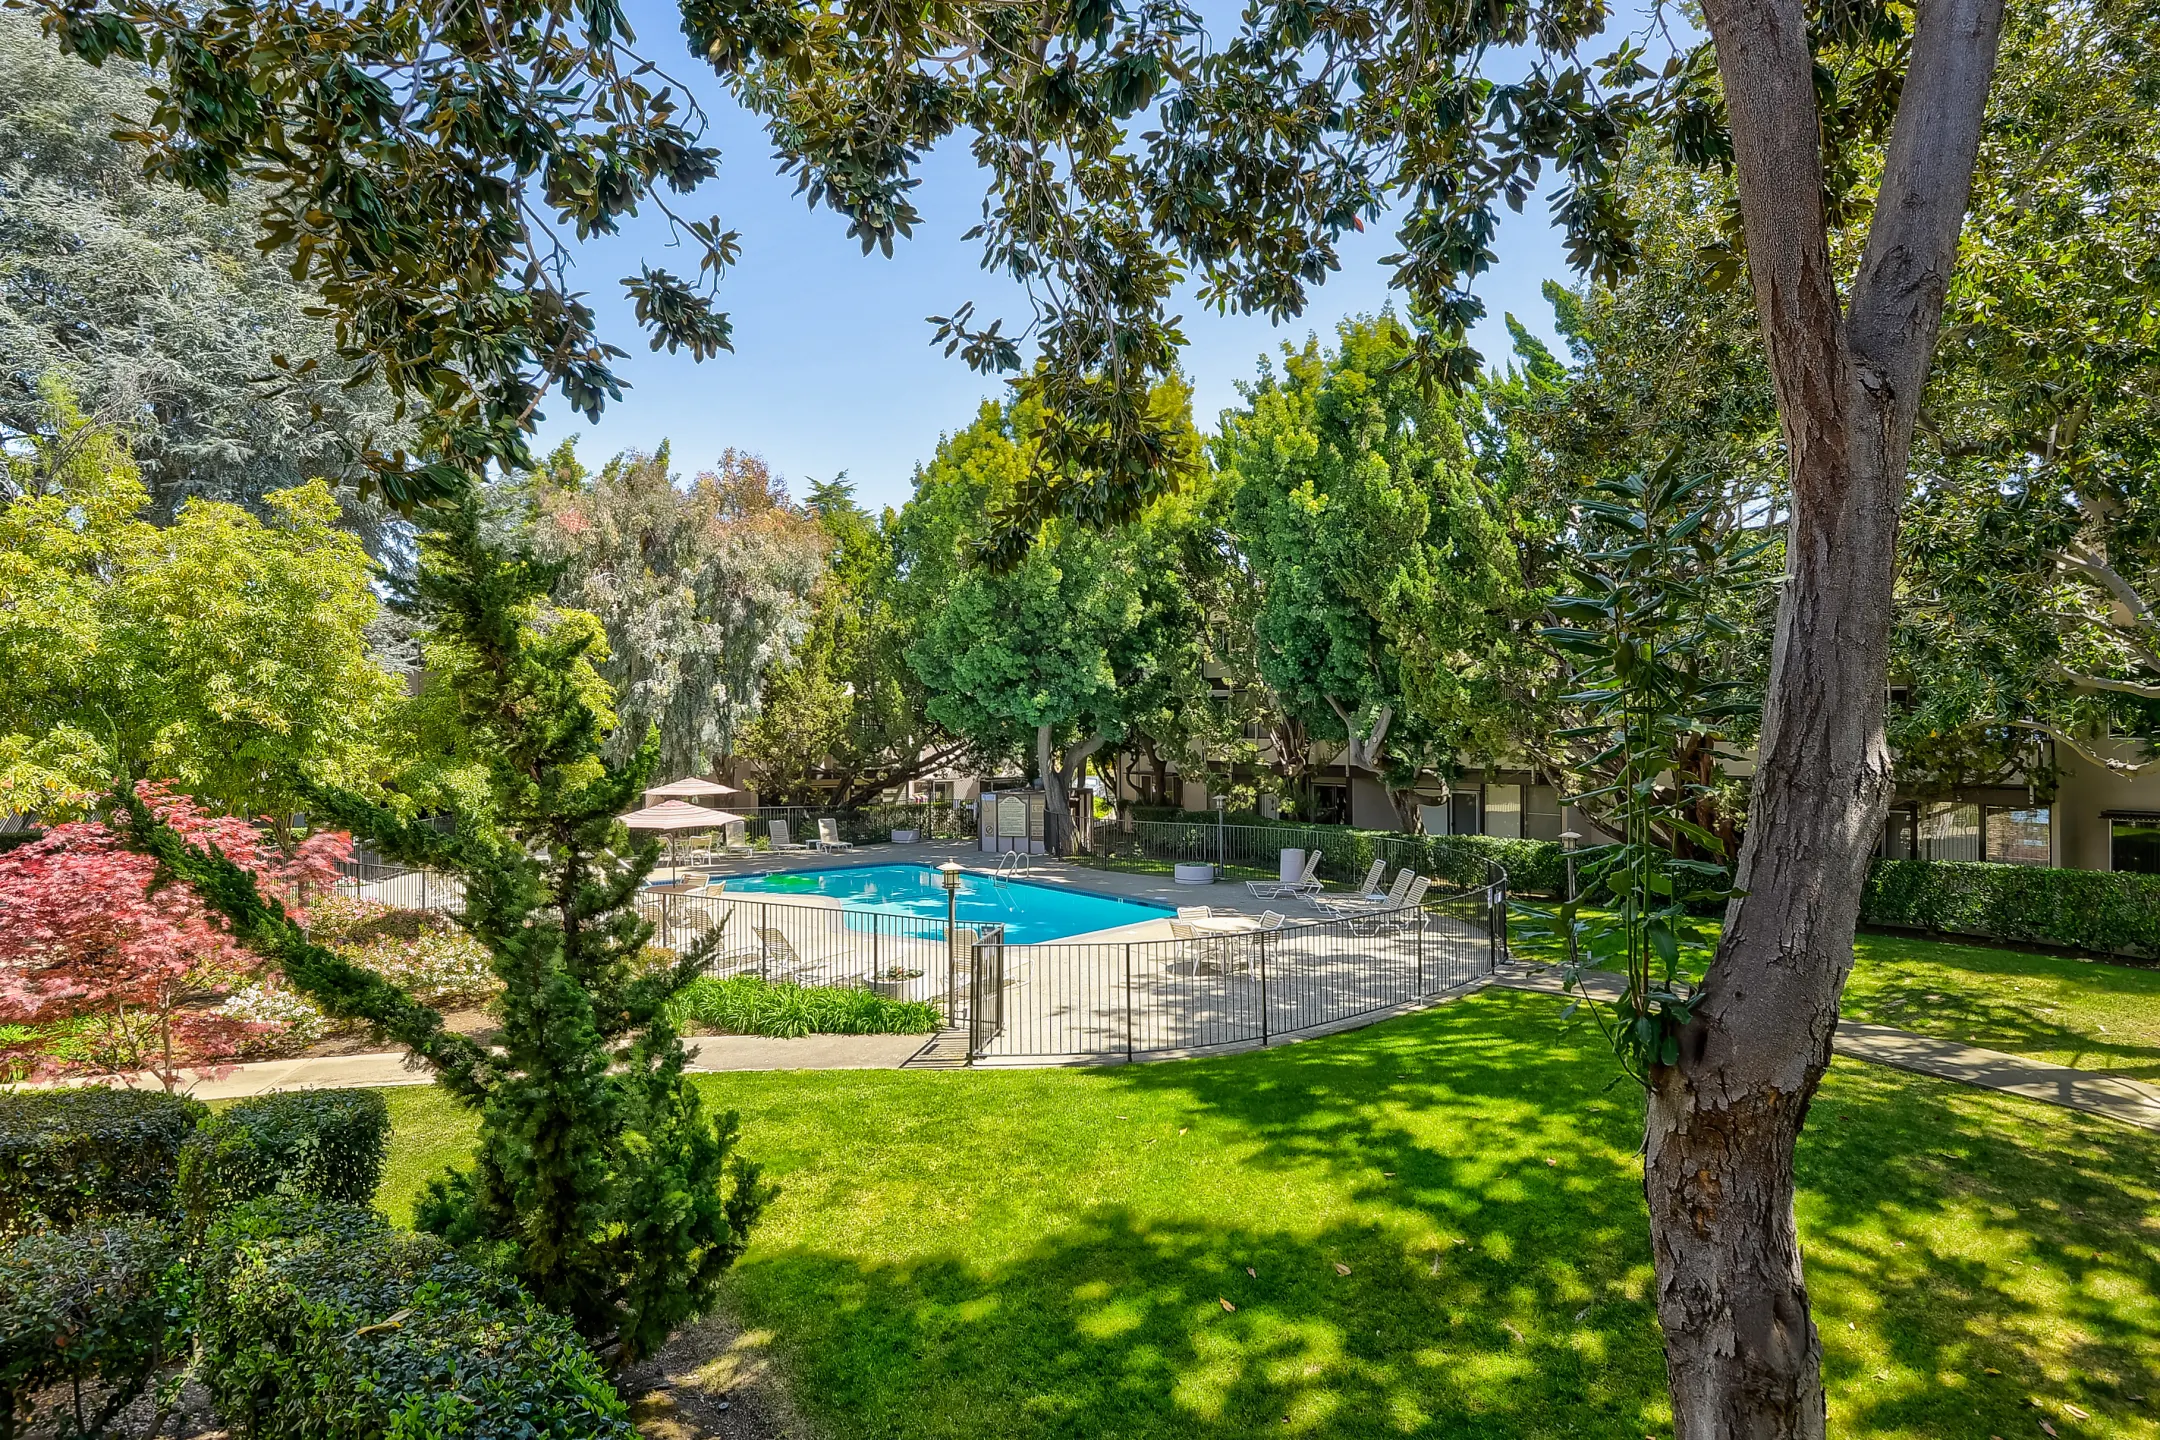 Pool - Parksquare Apartments - Palo Alto, CA